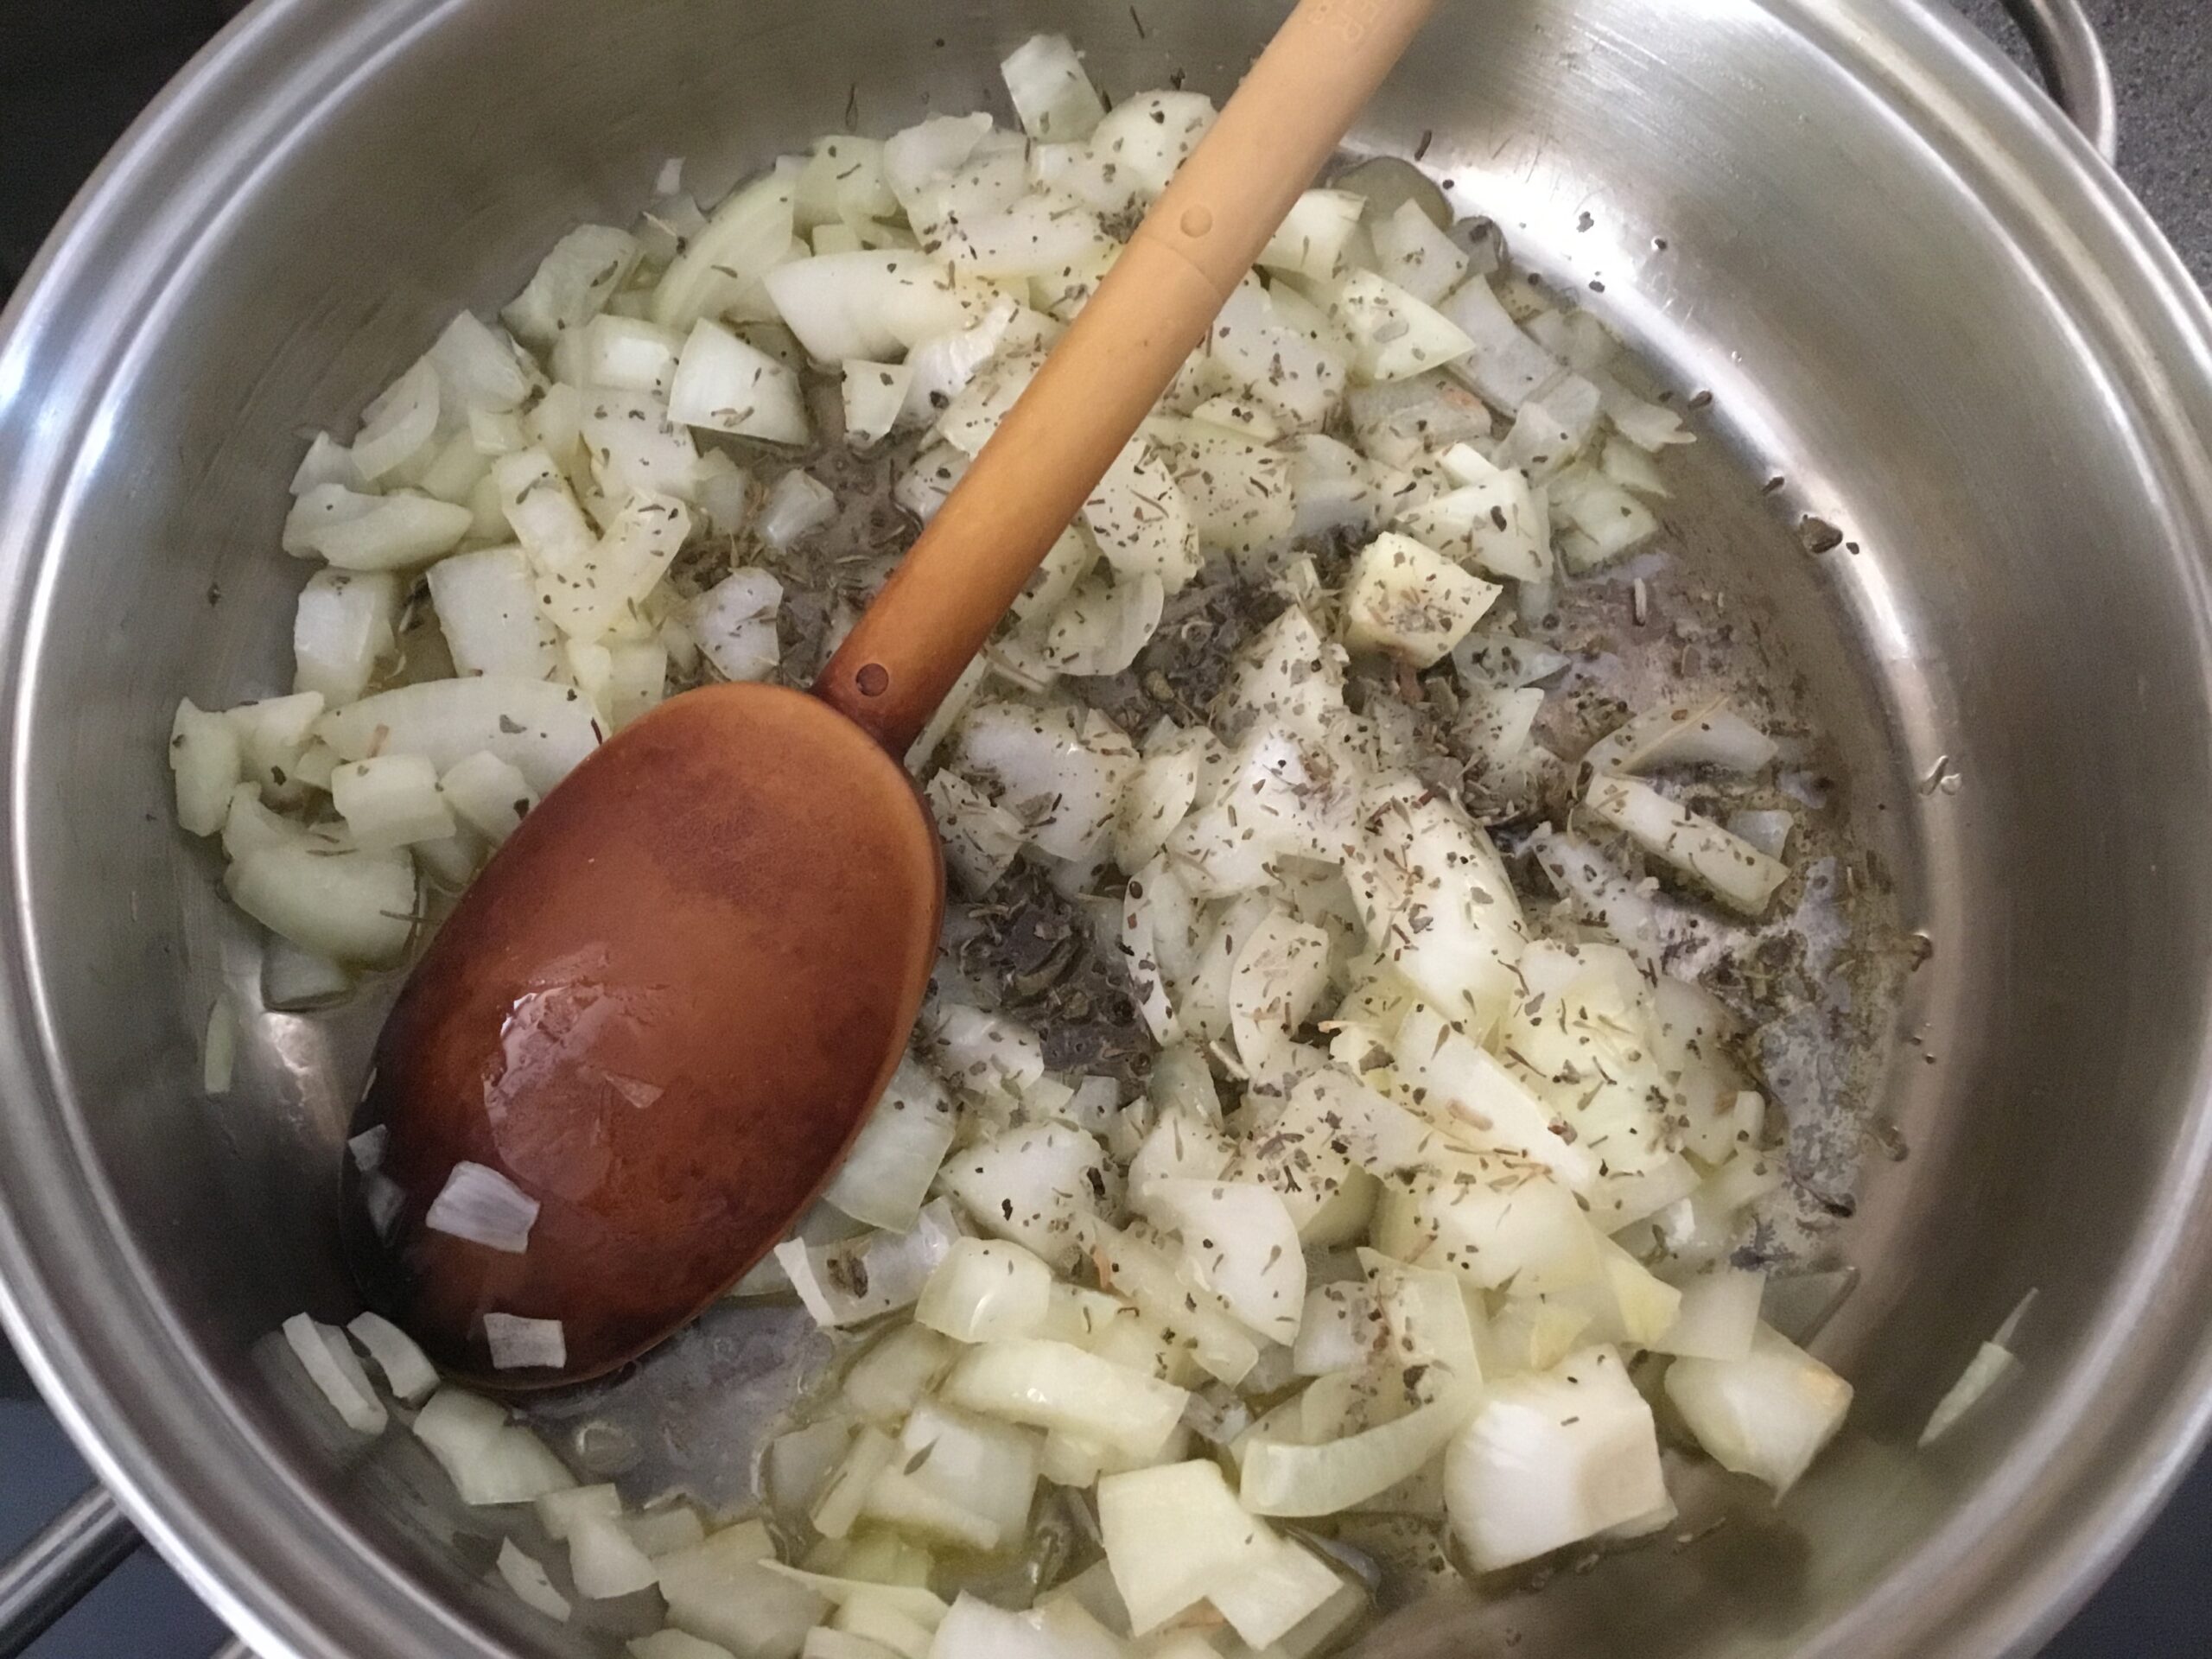 Sautéeing the onion